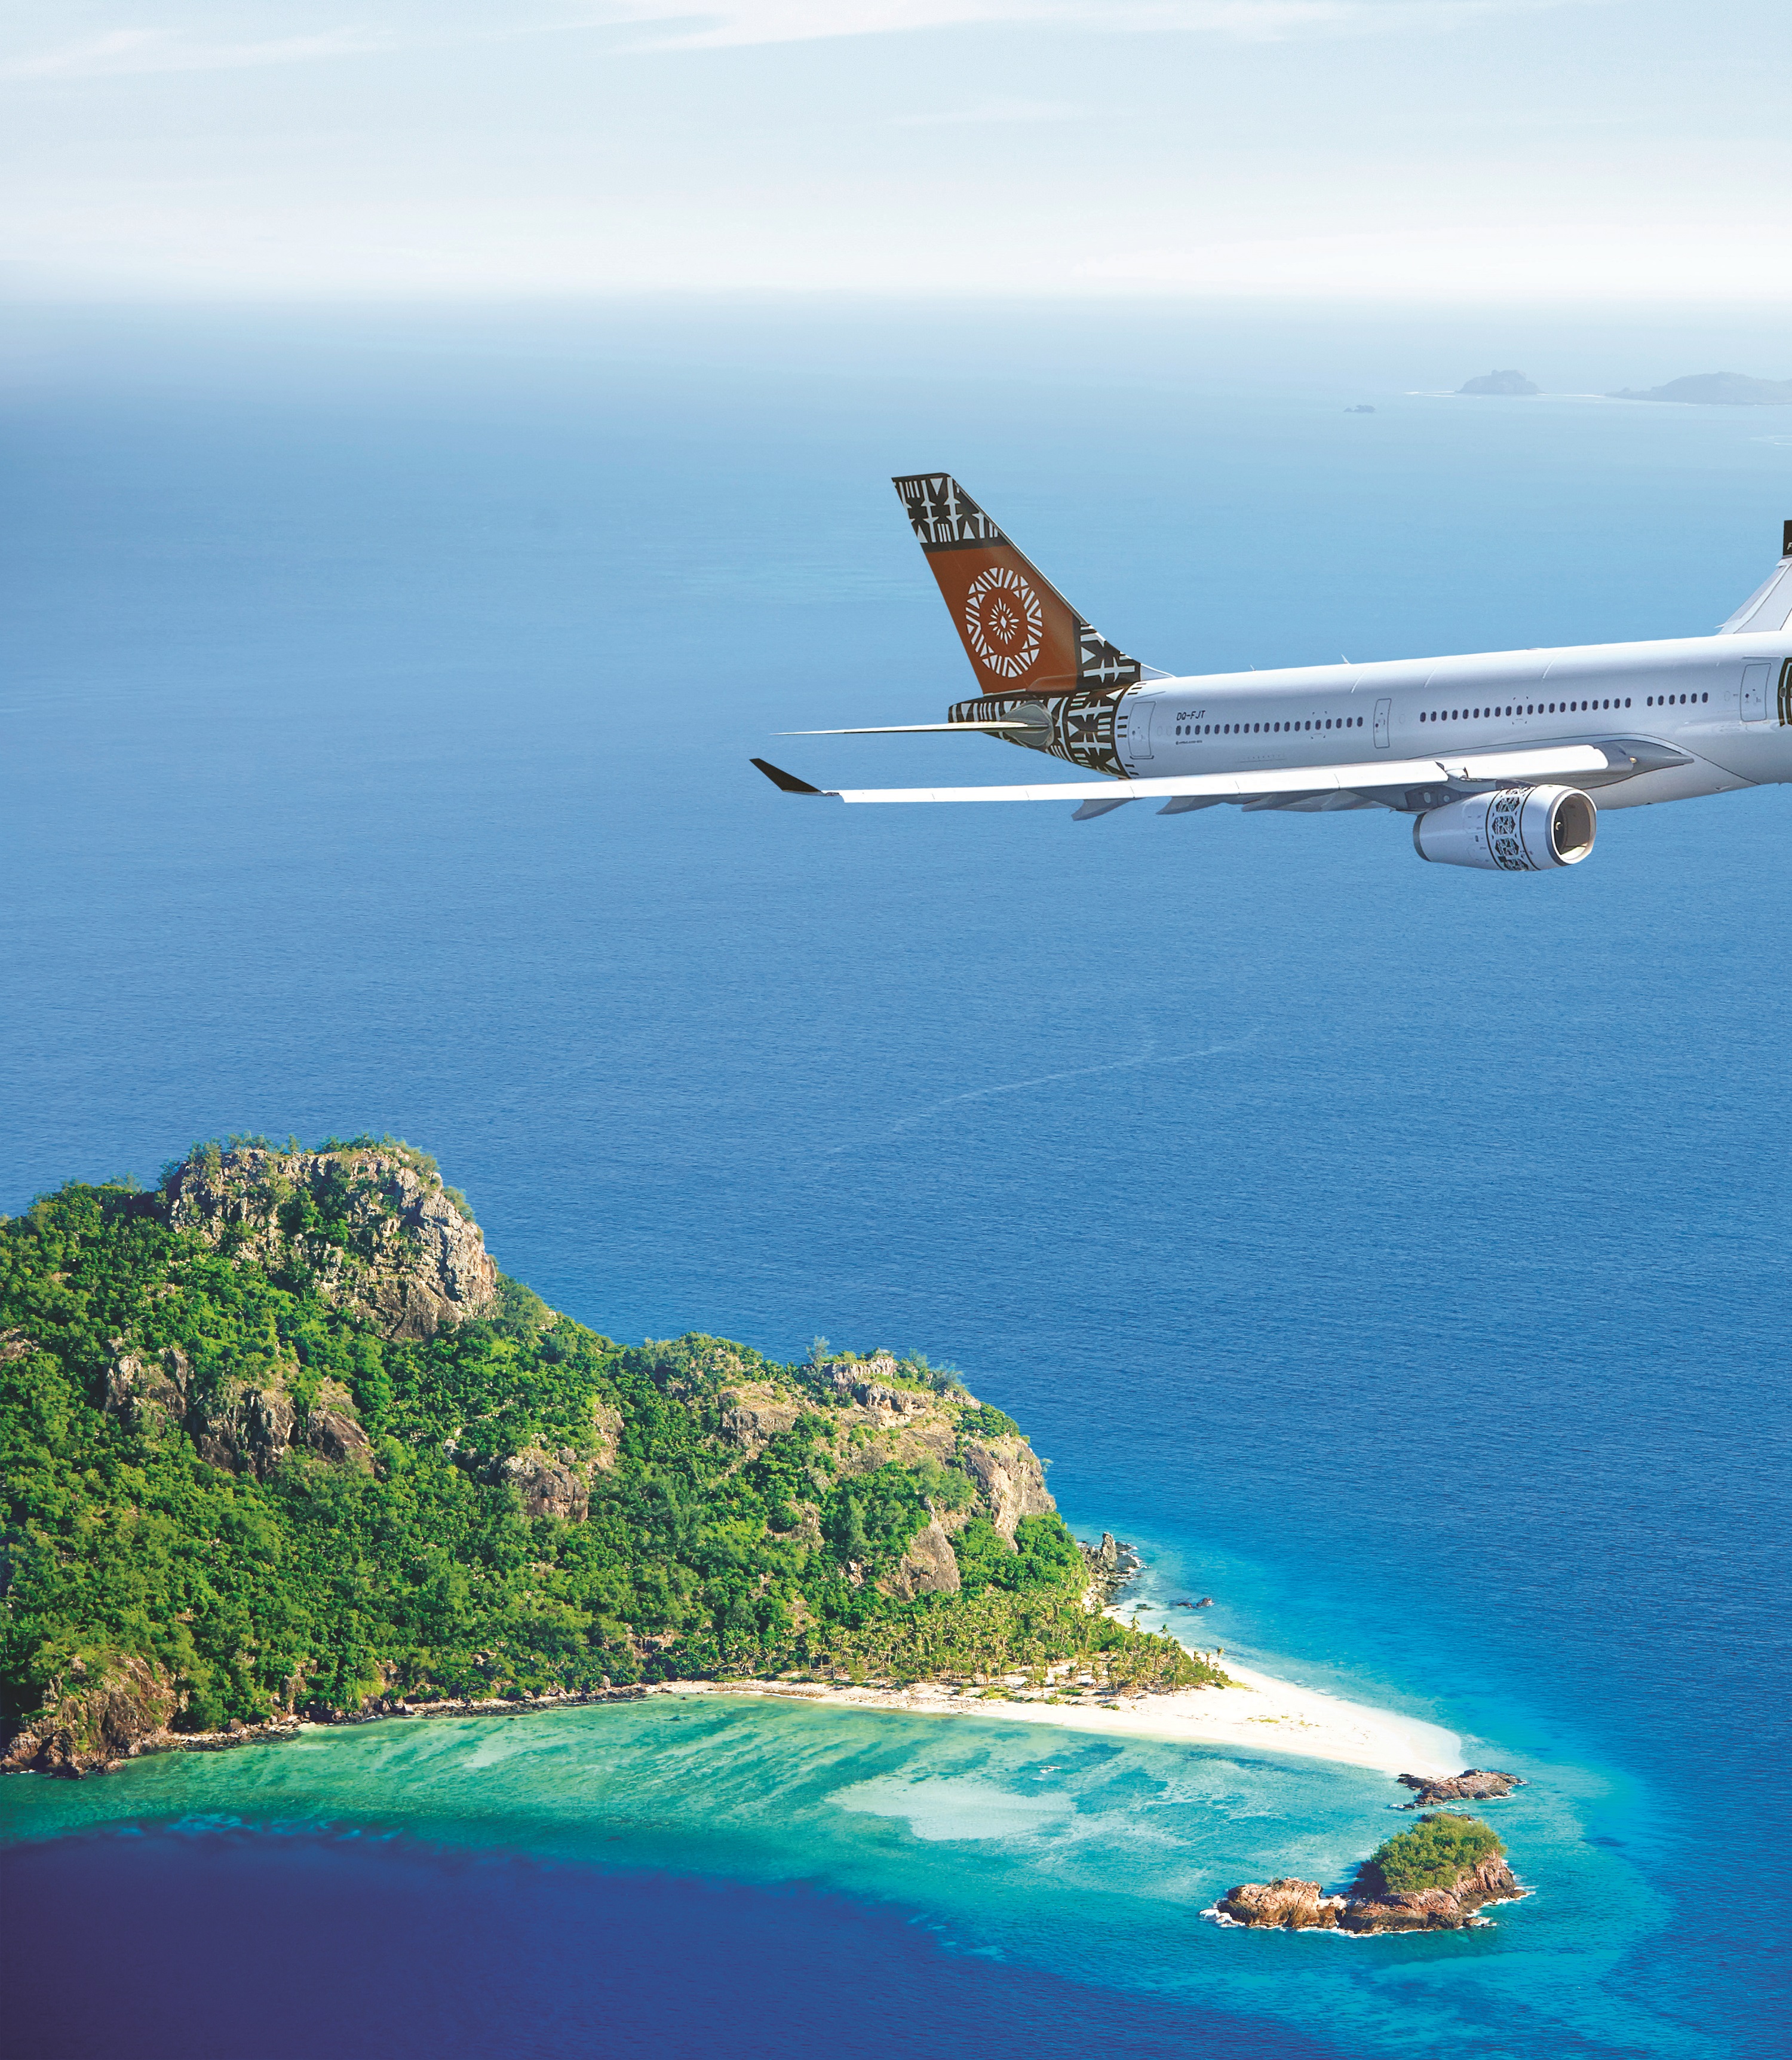 Christchurch Airport welcomes Fiji Airways' third permanent service between Christchurch and Nadi